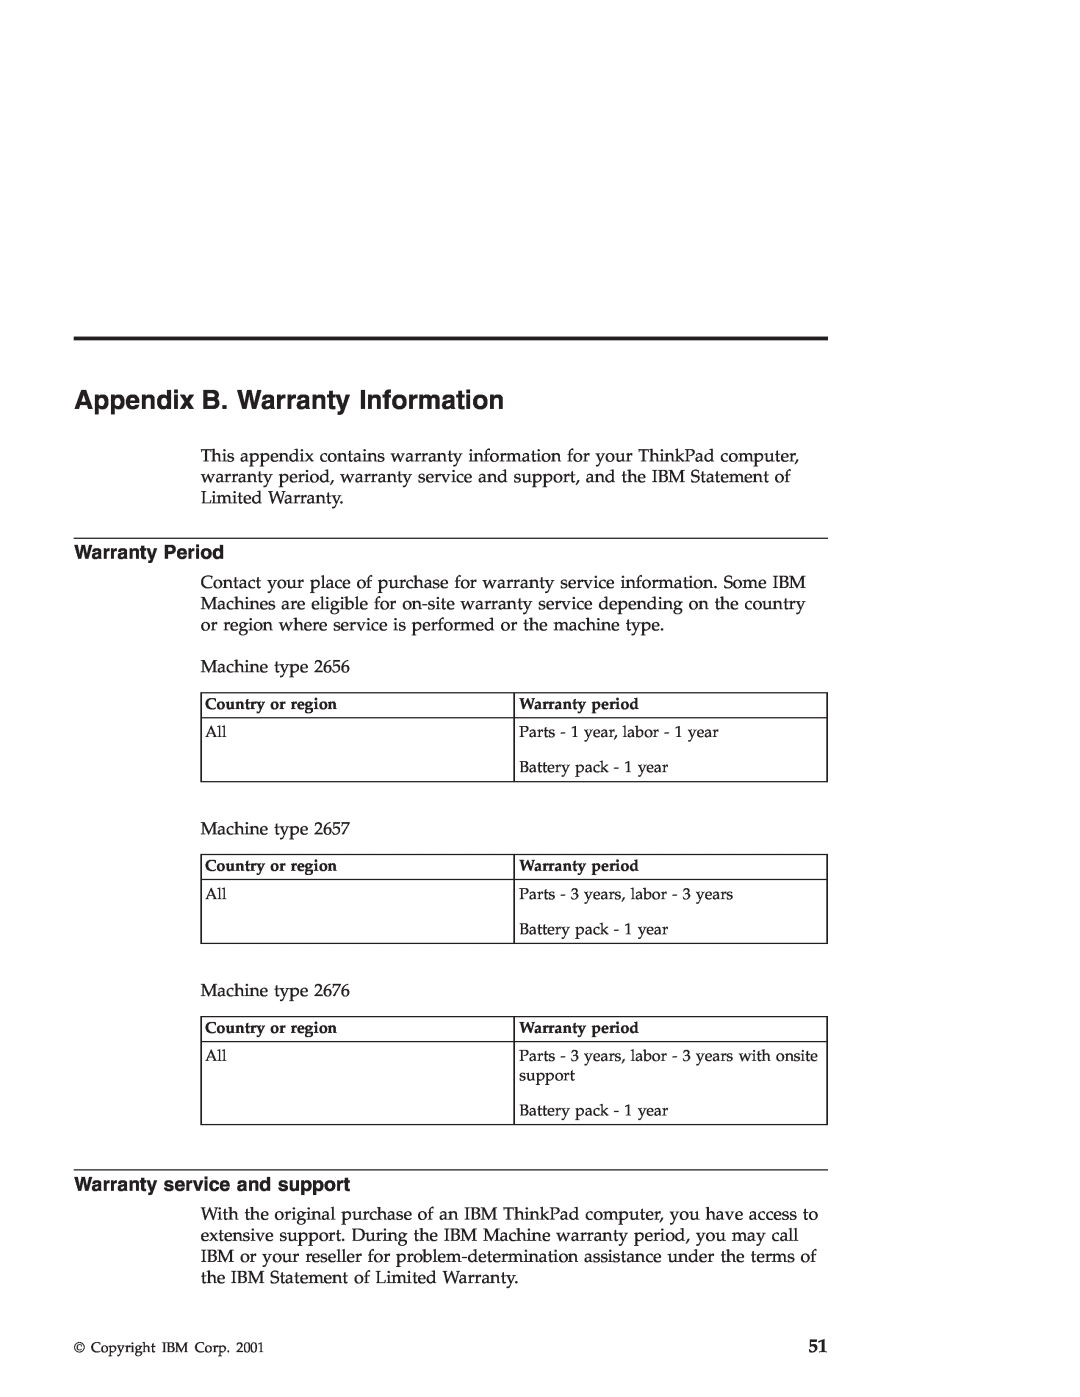 IBM R30 manual Appendix B. Warranty Information, Warranty Period, Warranty service and support 